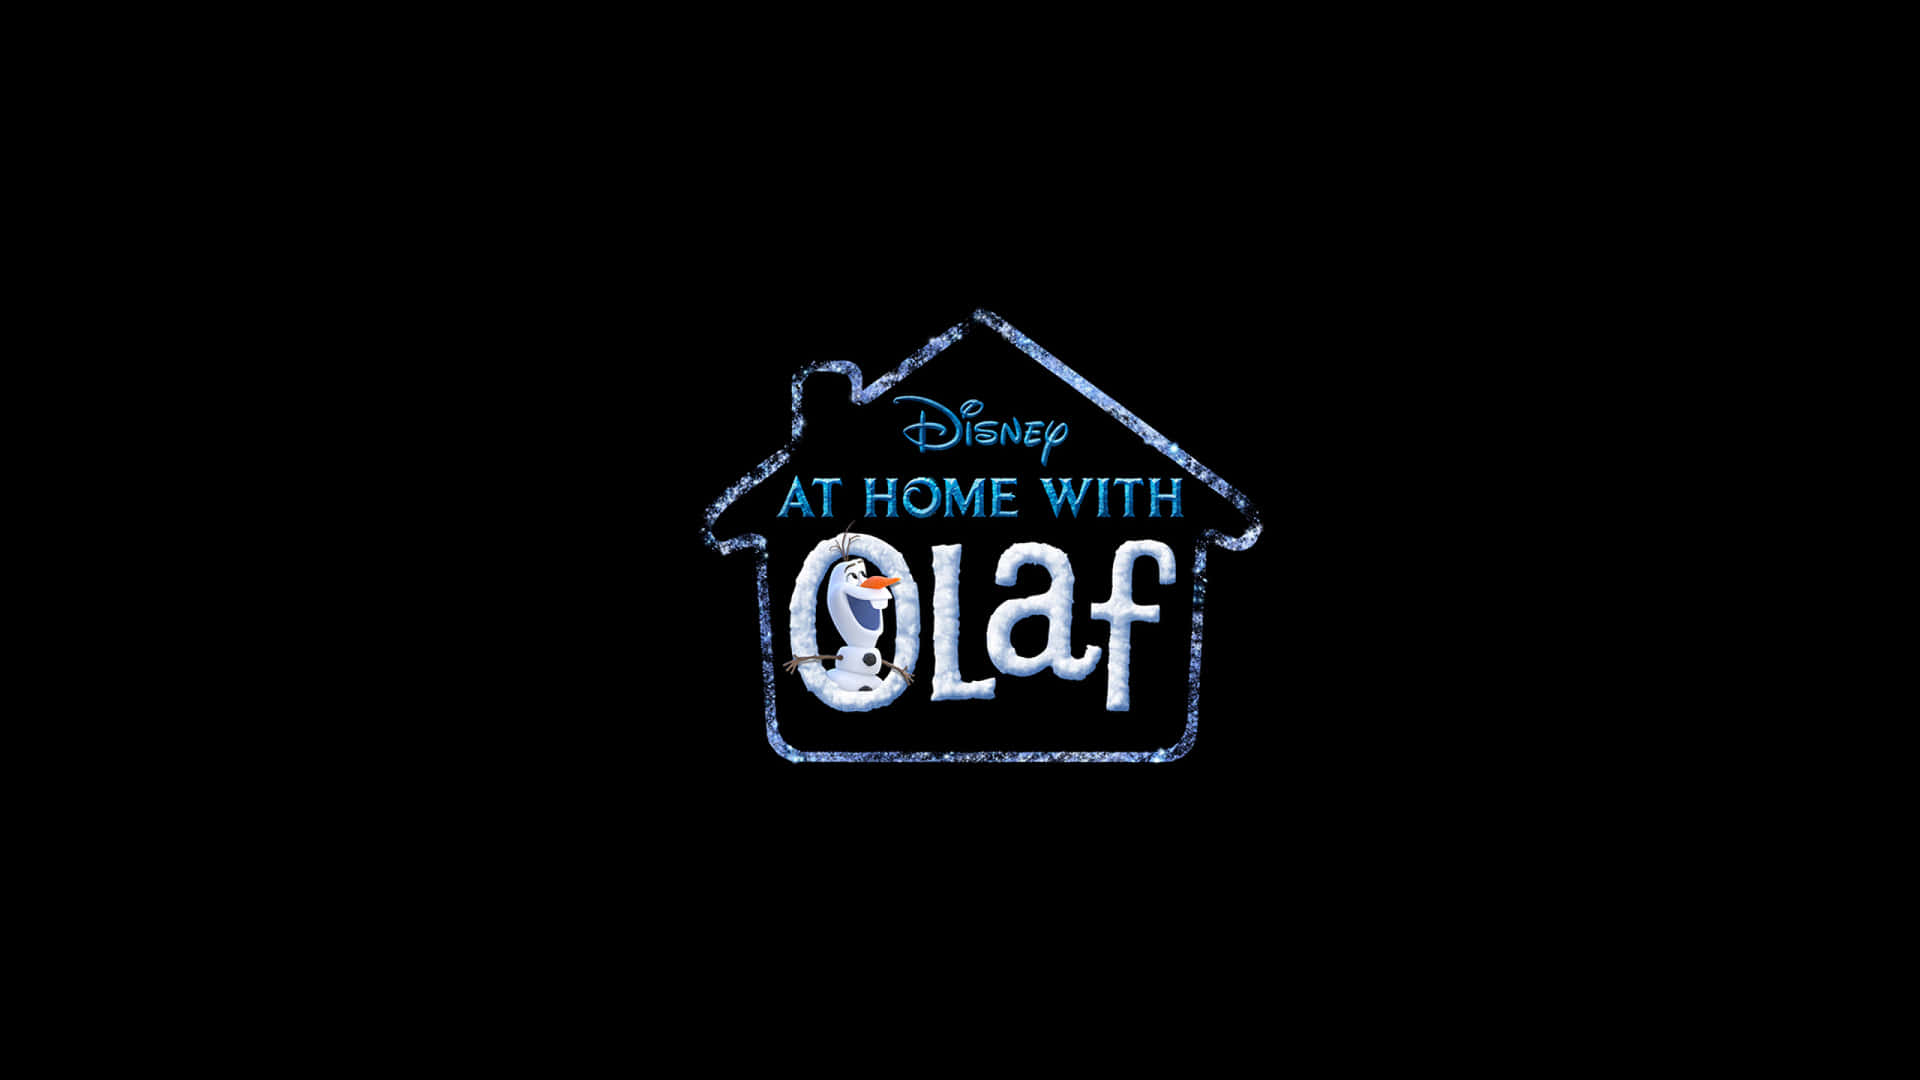 Fondode Pantalla De Olaf Dentro De La Casa En Resolución 1440p De Disney.